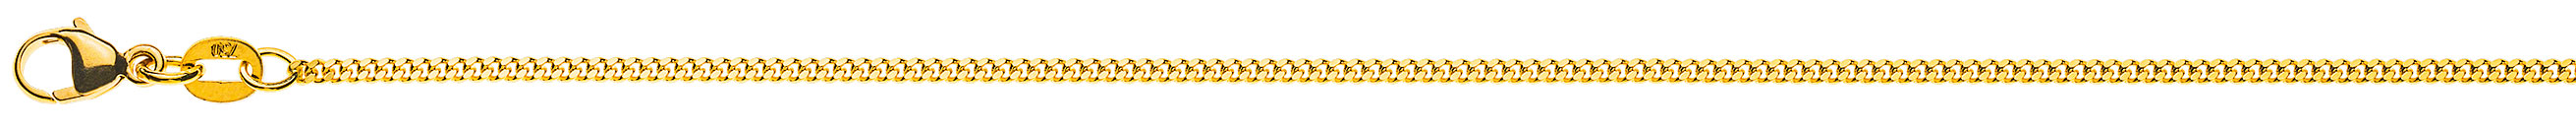 AURONOS Prestige Necklace yellow gold 18K curb chain polished 45cm 1.6mm